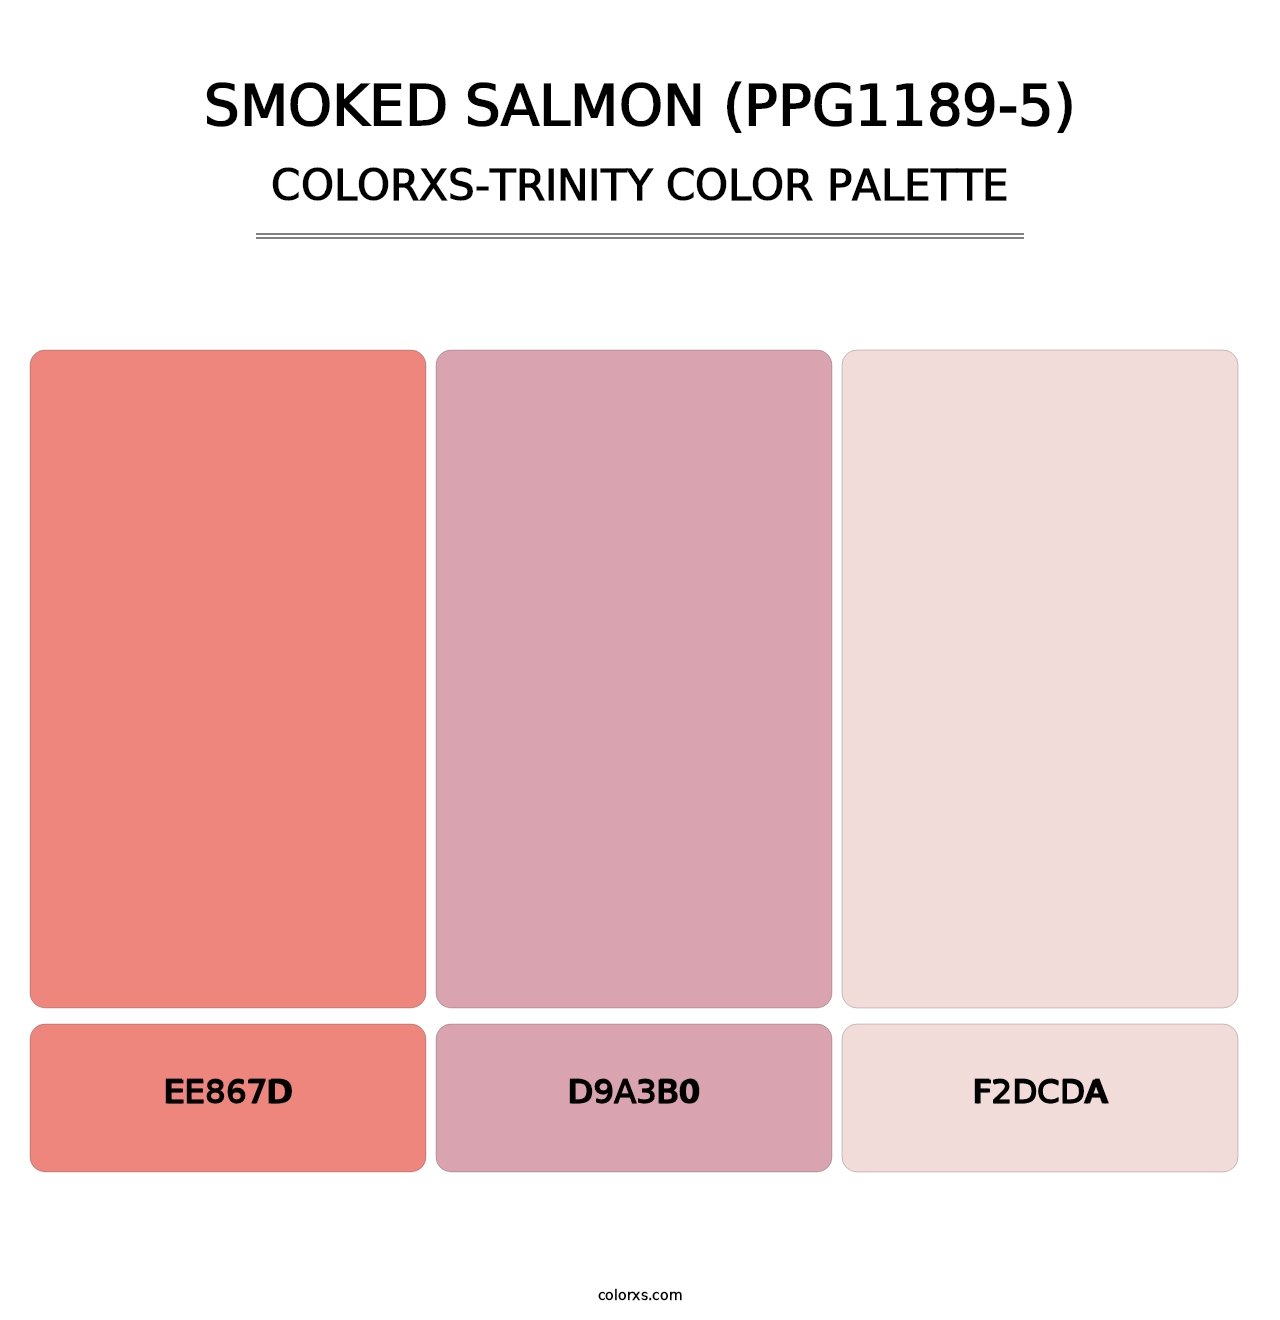 Smoked Salmon (PPG1189-5) - Colorxs Trinity Palette